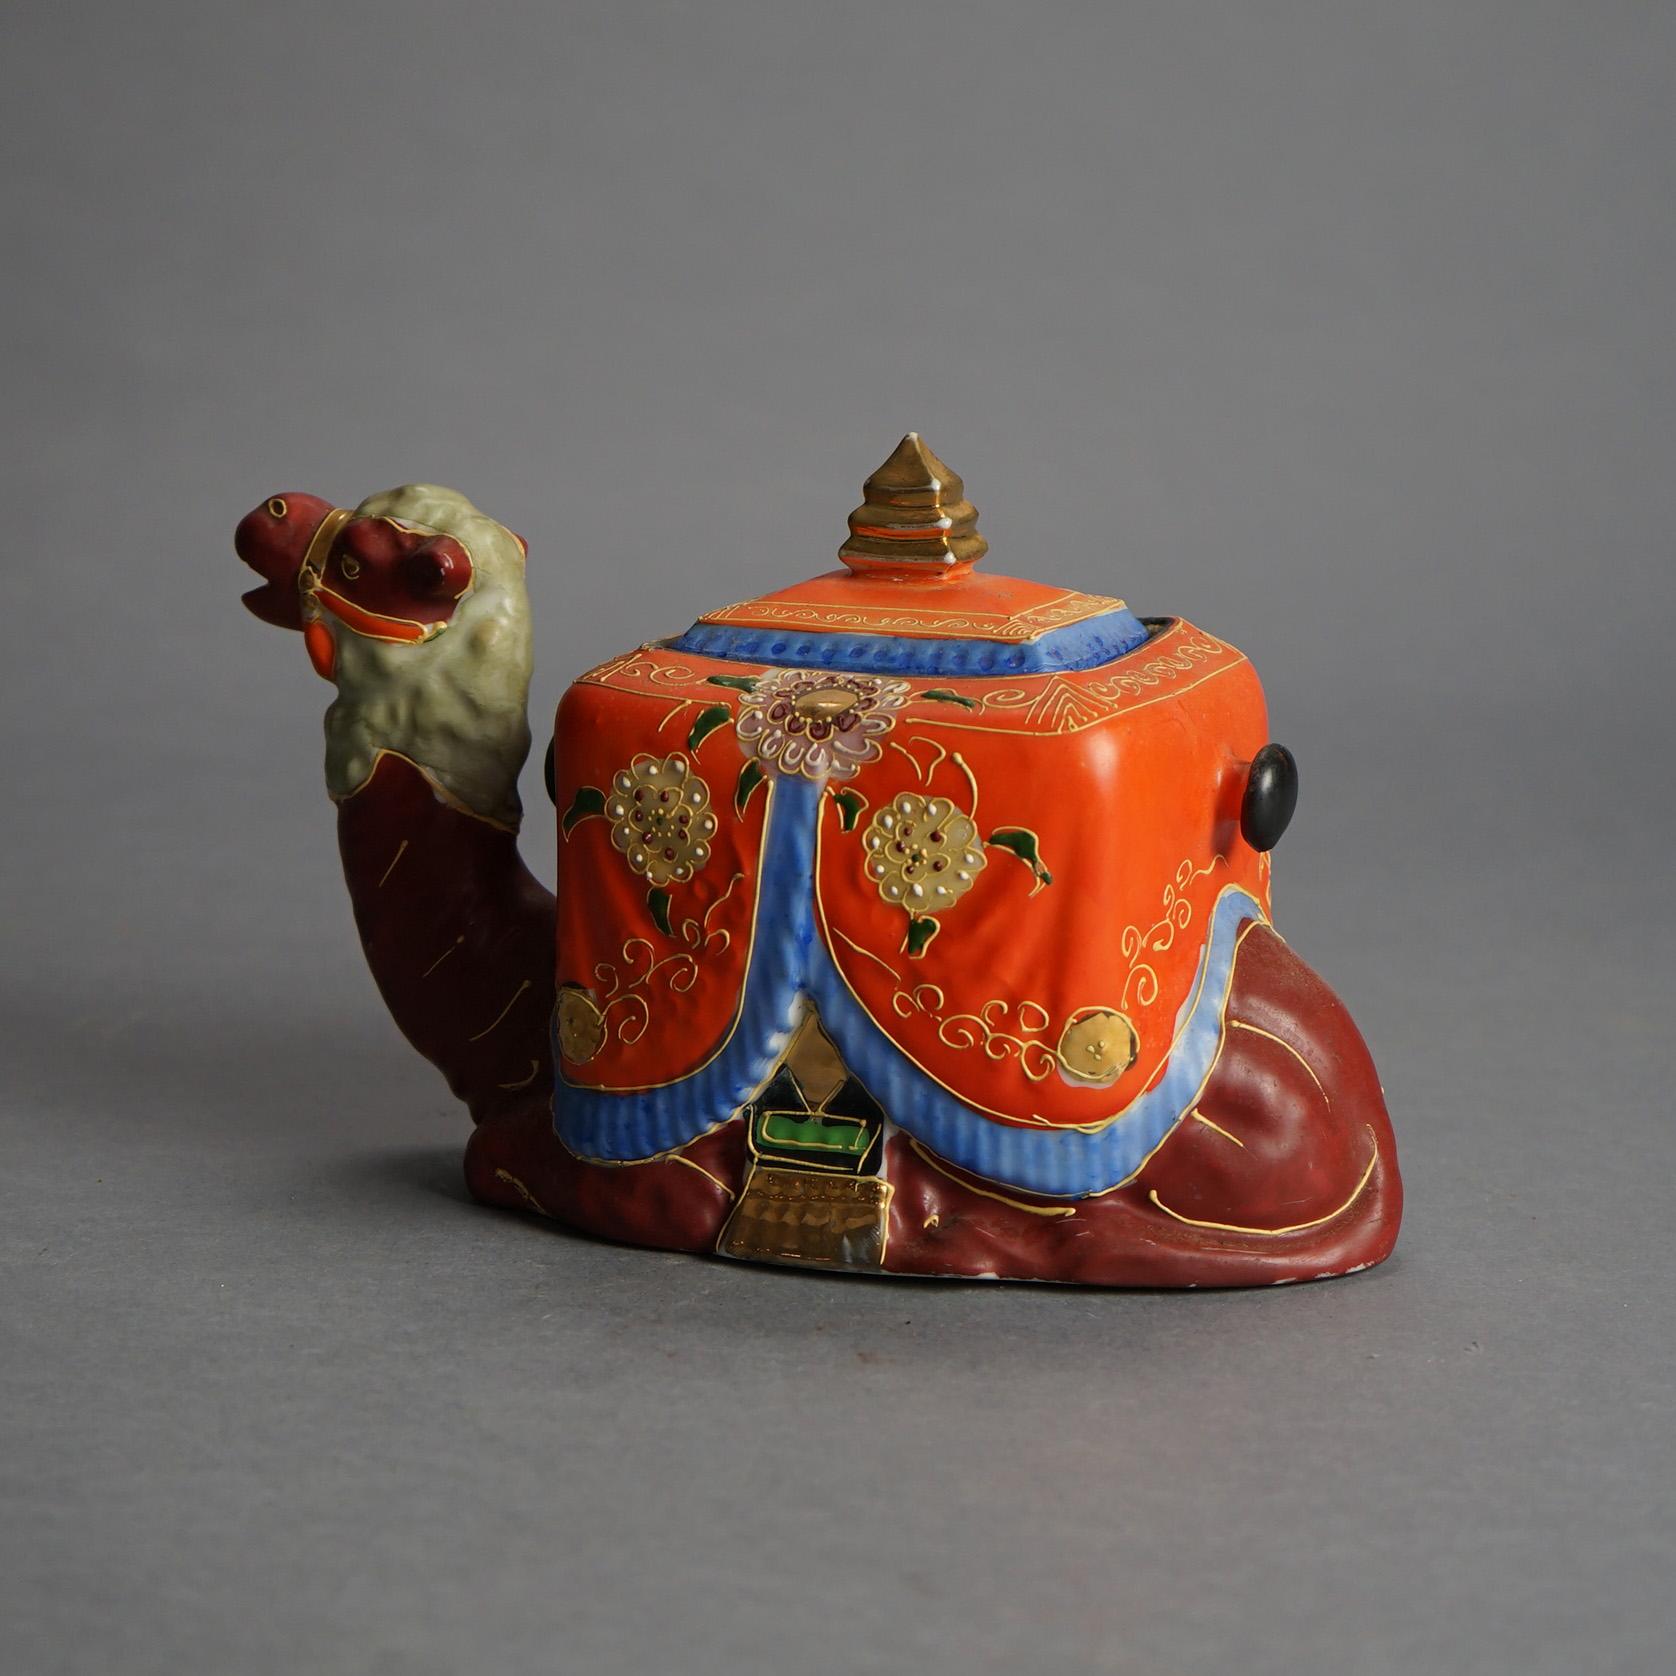 Antique Japanese Satsuma Figural Pottery Camel Lidded Jar with Gilt Highlights C1920

Measures - 5.5